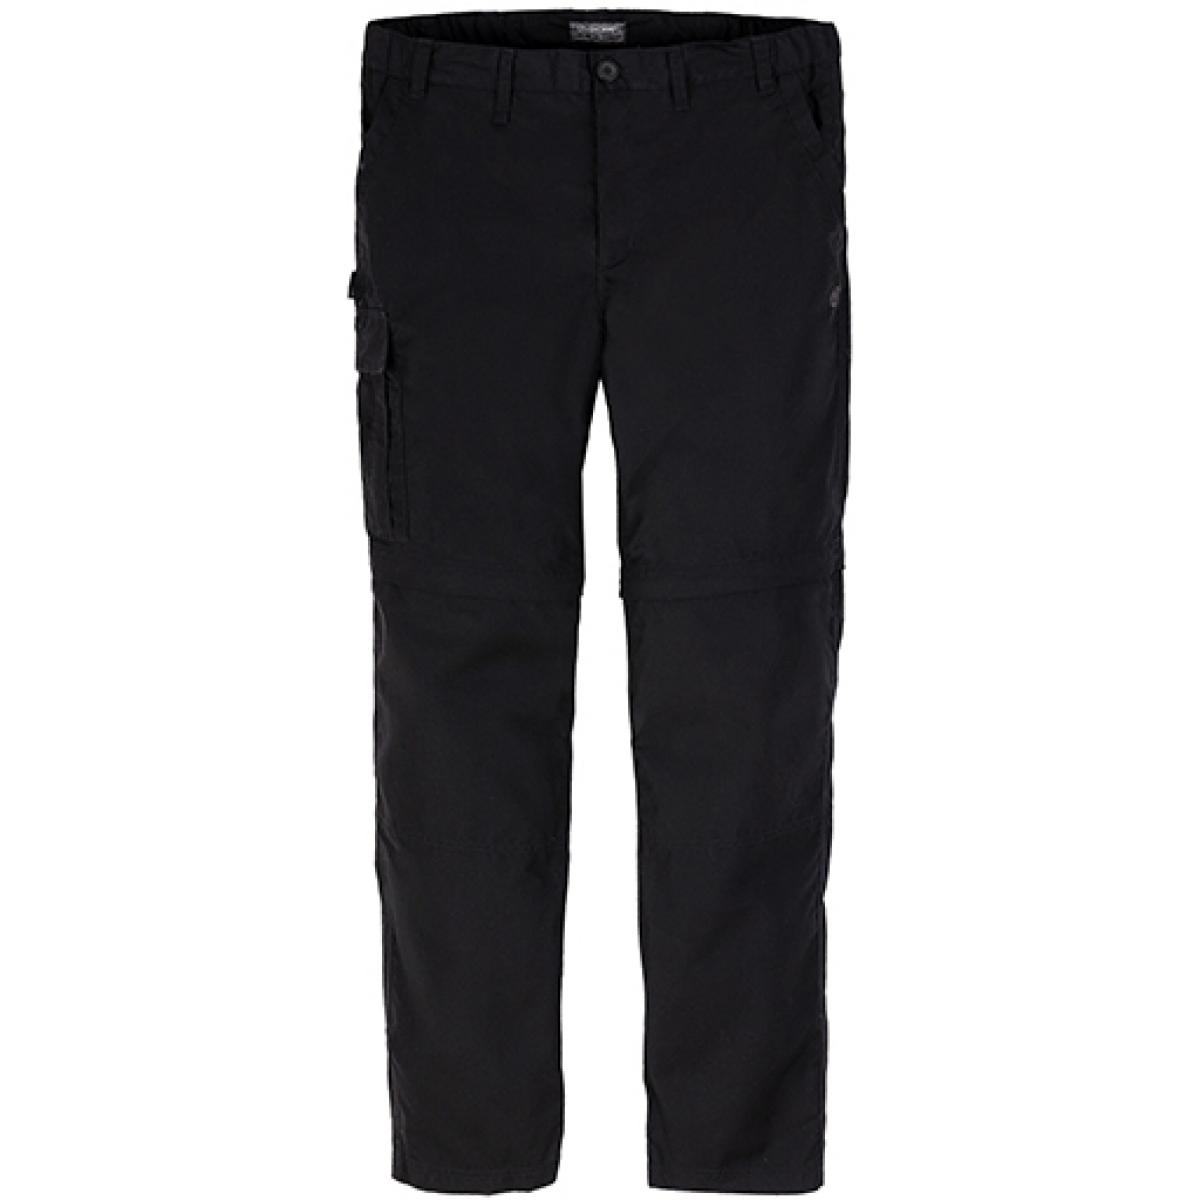 Hersteller: Craghoppers Expert Herstellernummer: CEJ001 Artikelbezeichnung: Expert Kiwi Tailored Trousers - Arbeithose Farbe: Black